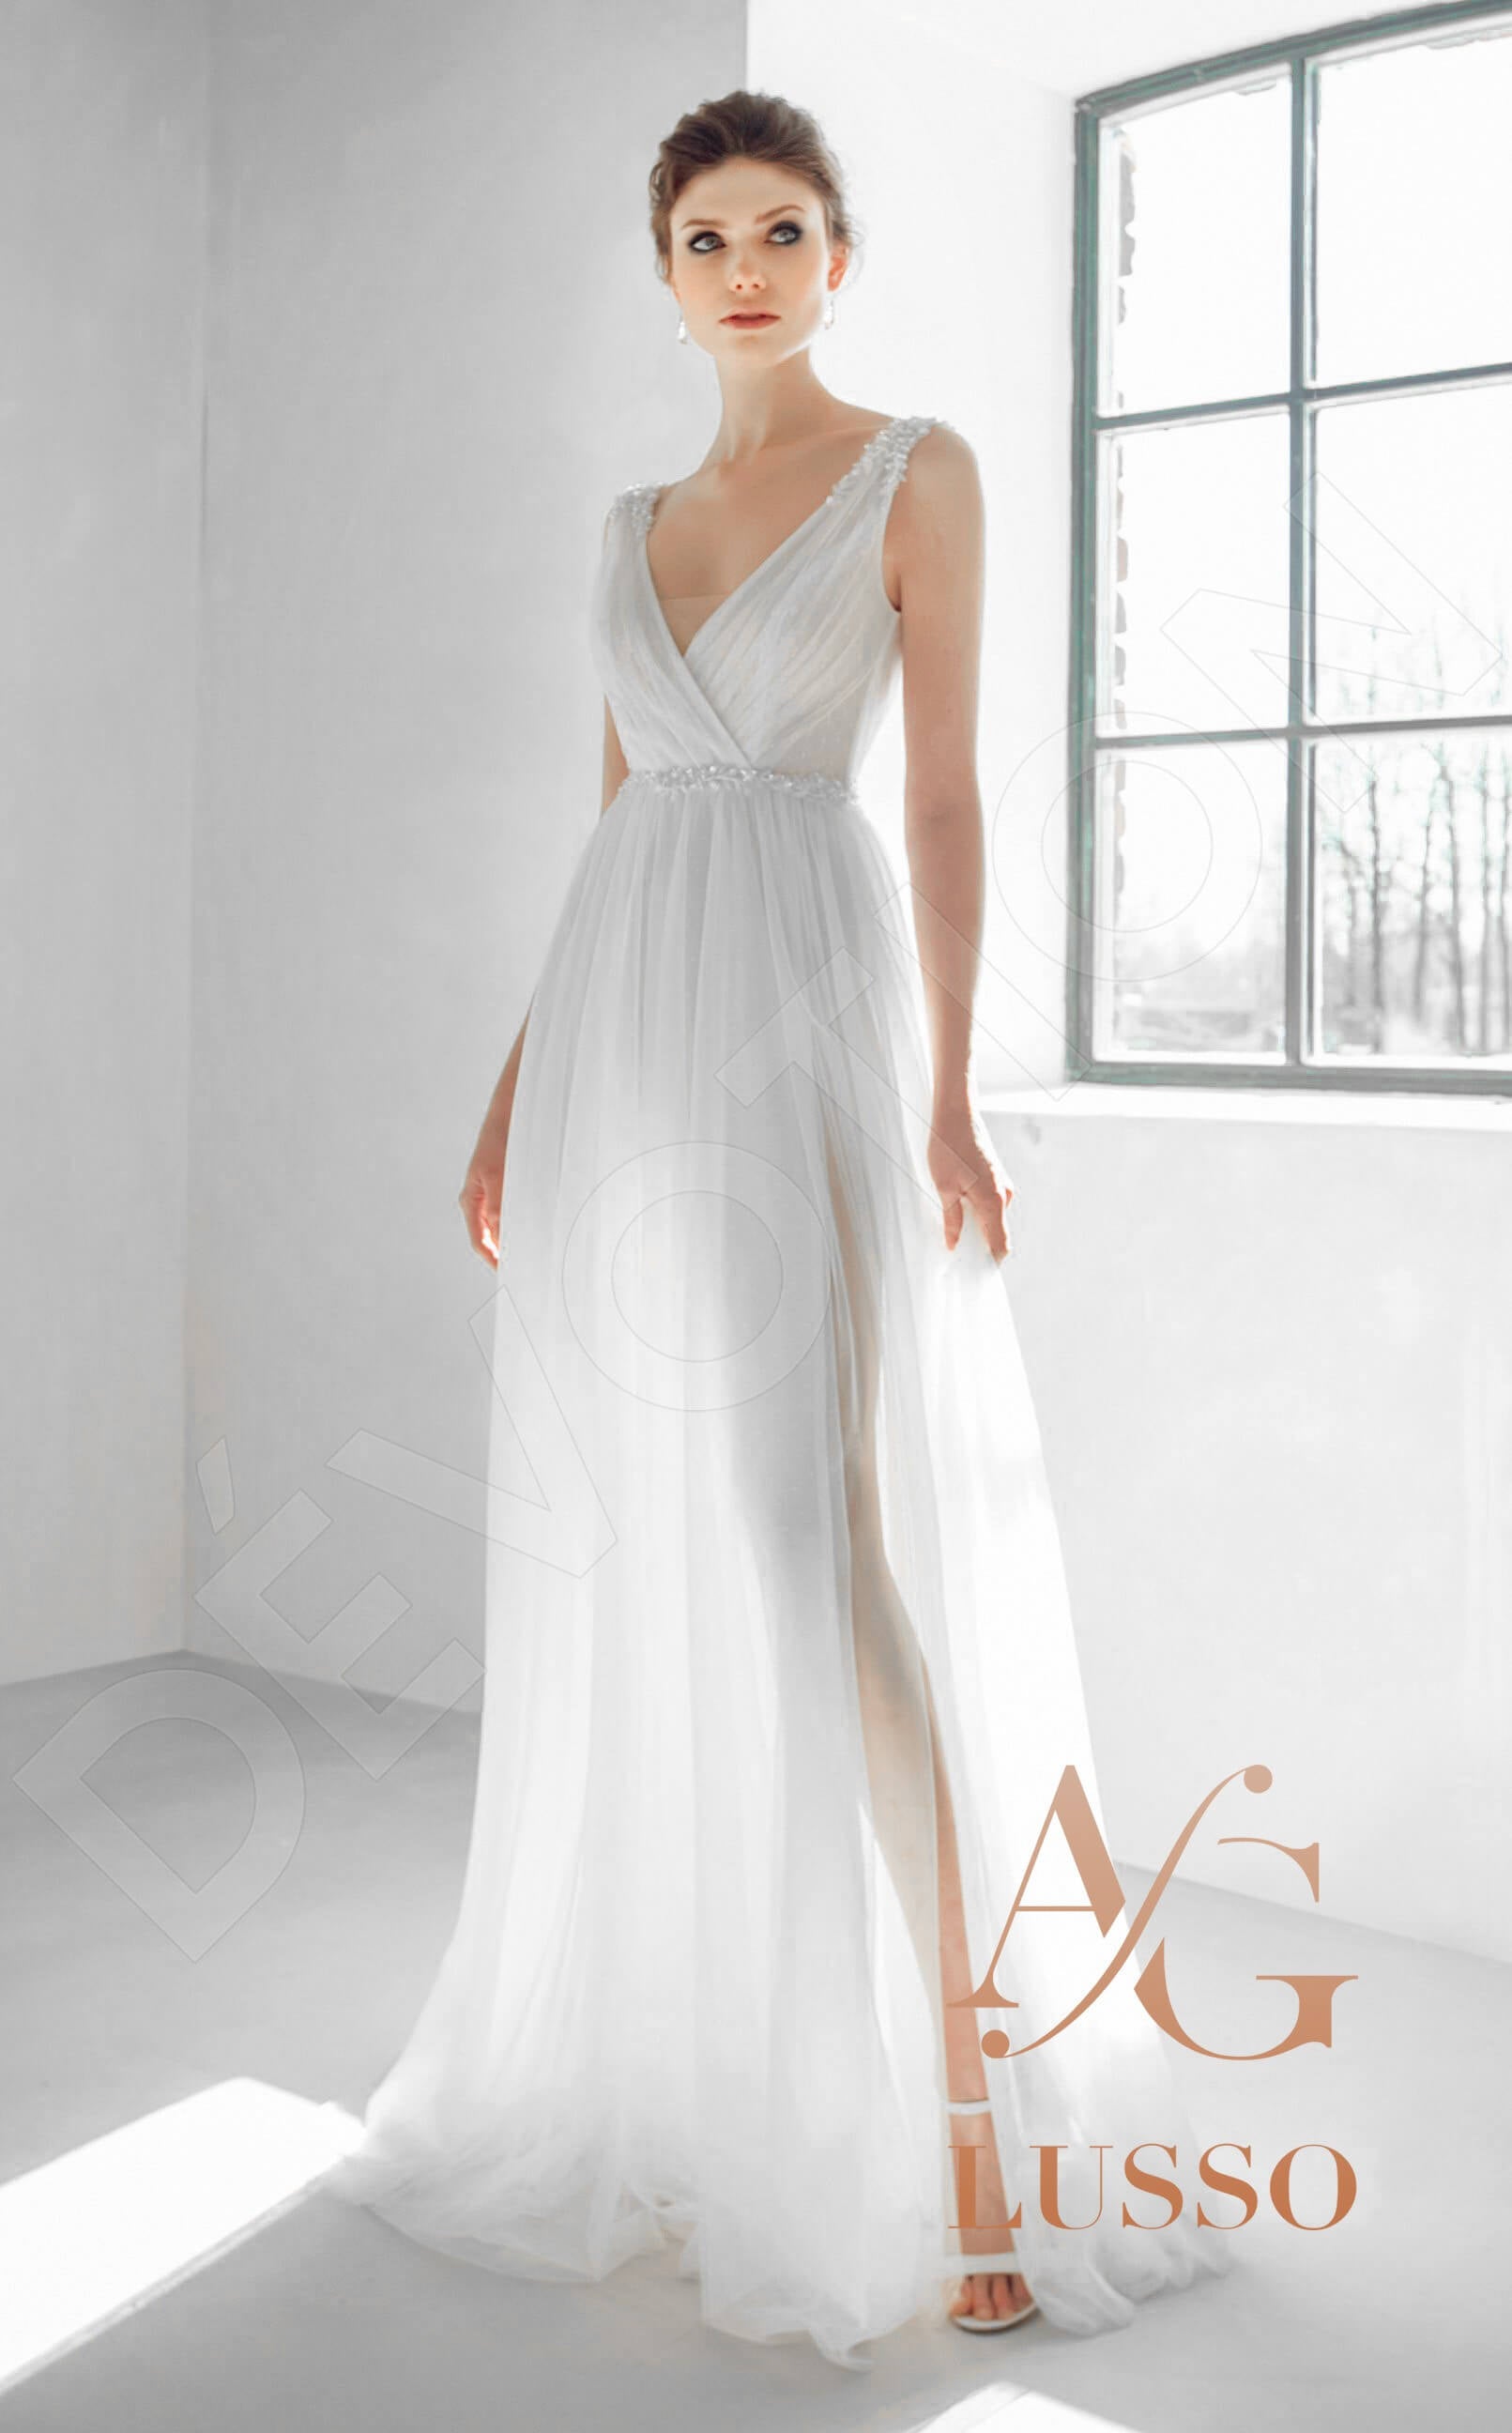 Chloelini Sheath/Column V-neck Mediumivory Wedding dress